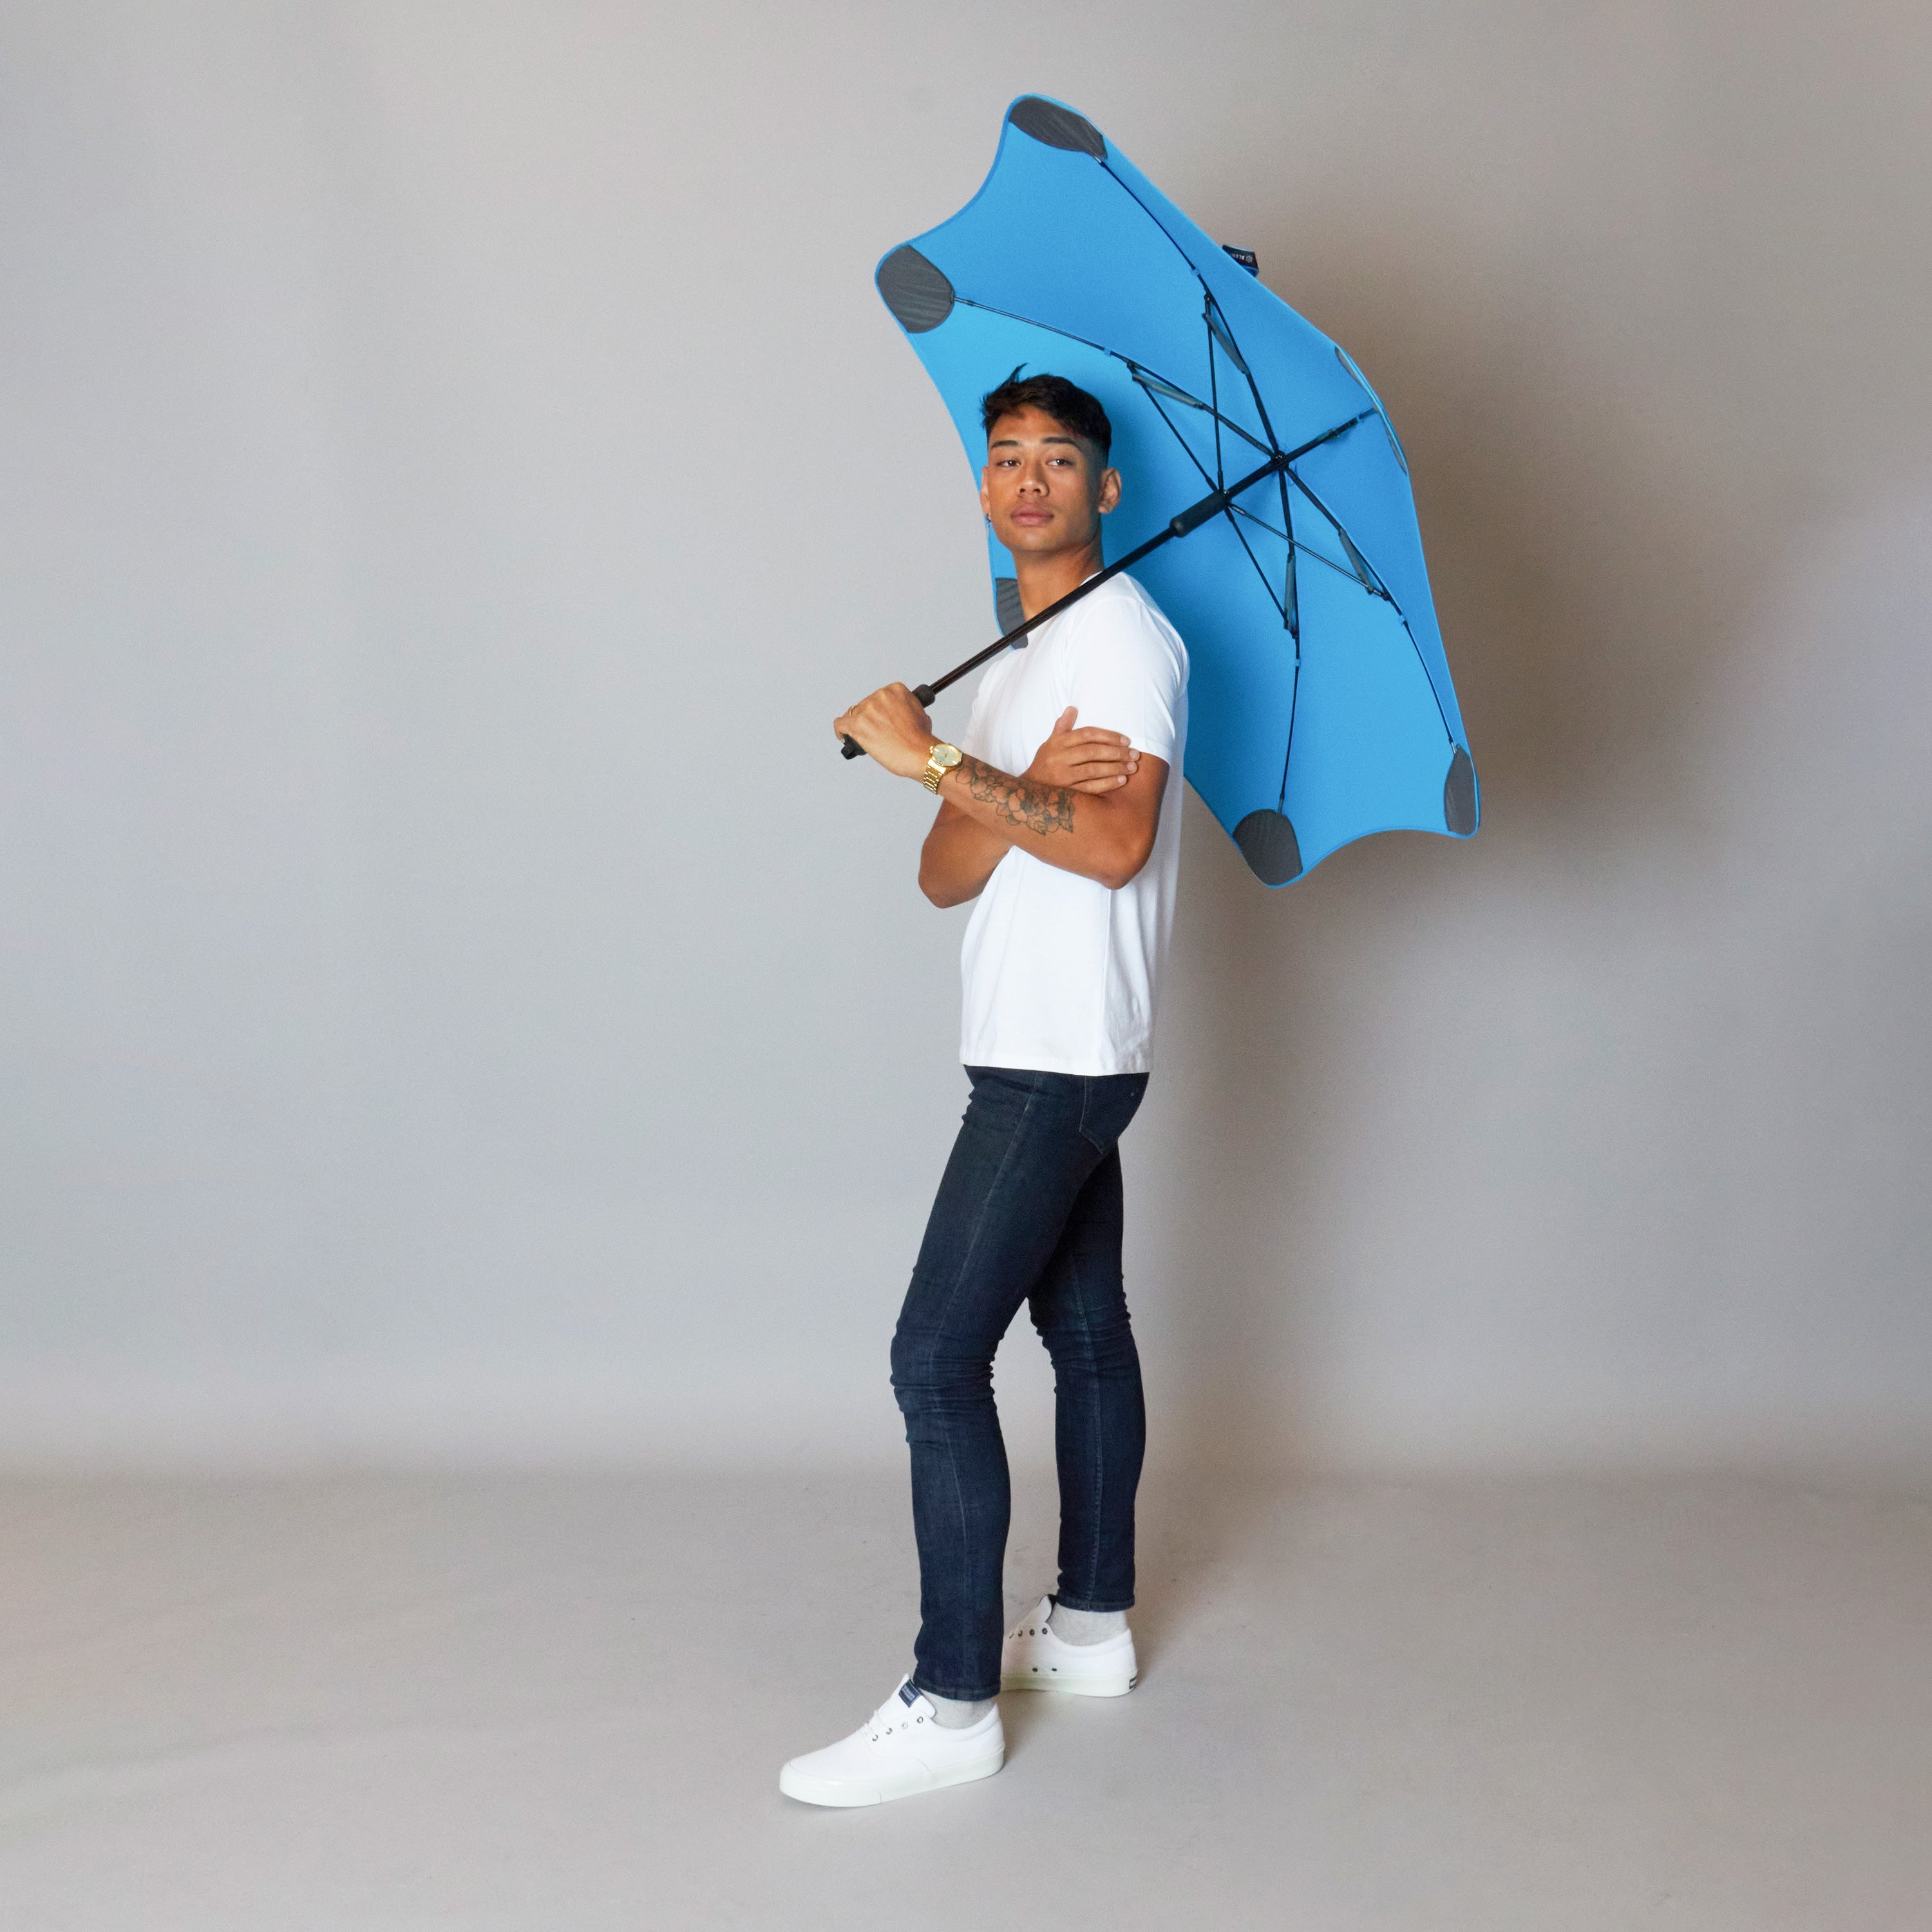 2020 Classic Blue Blunt Umbrella Model Side View